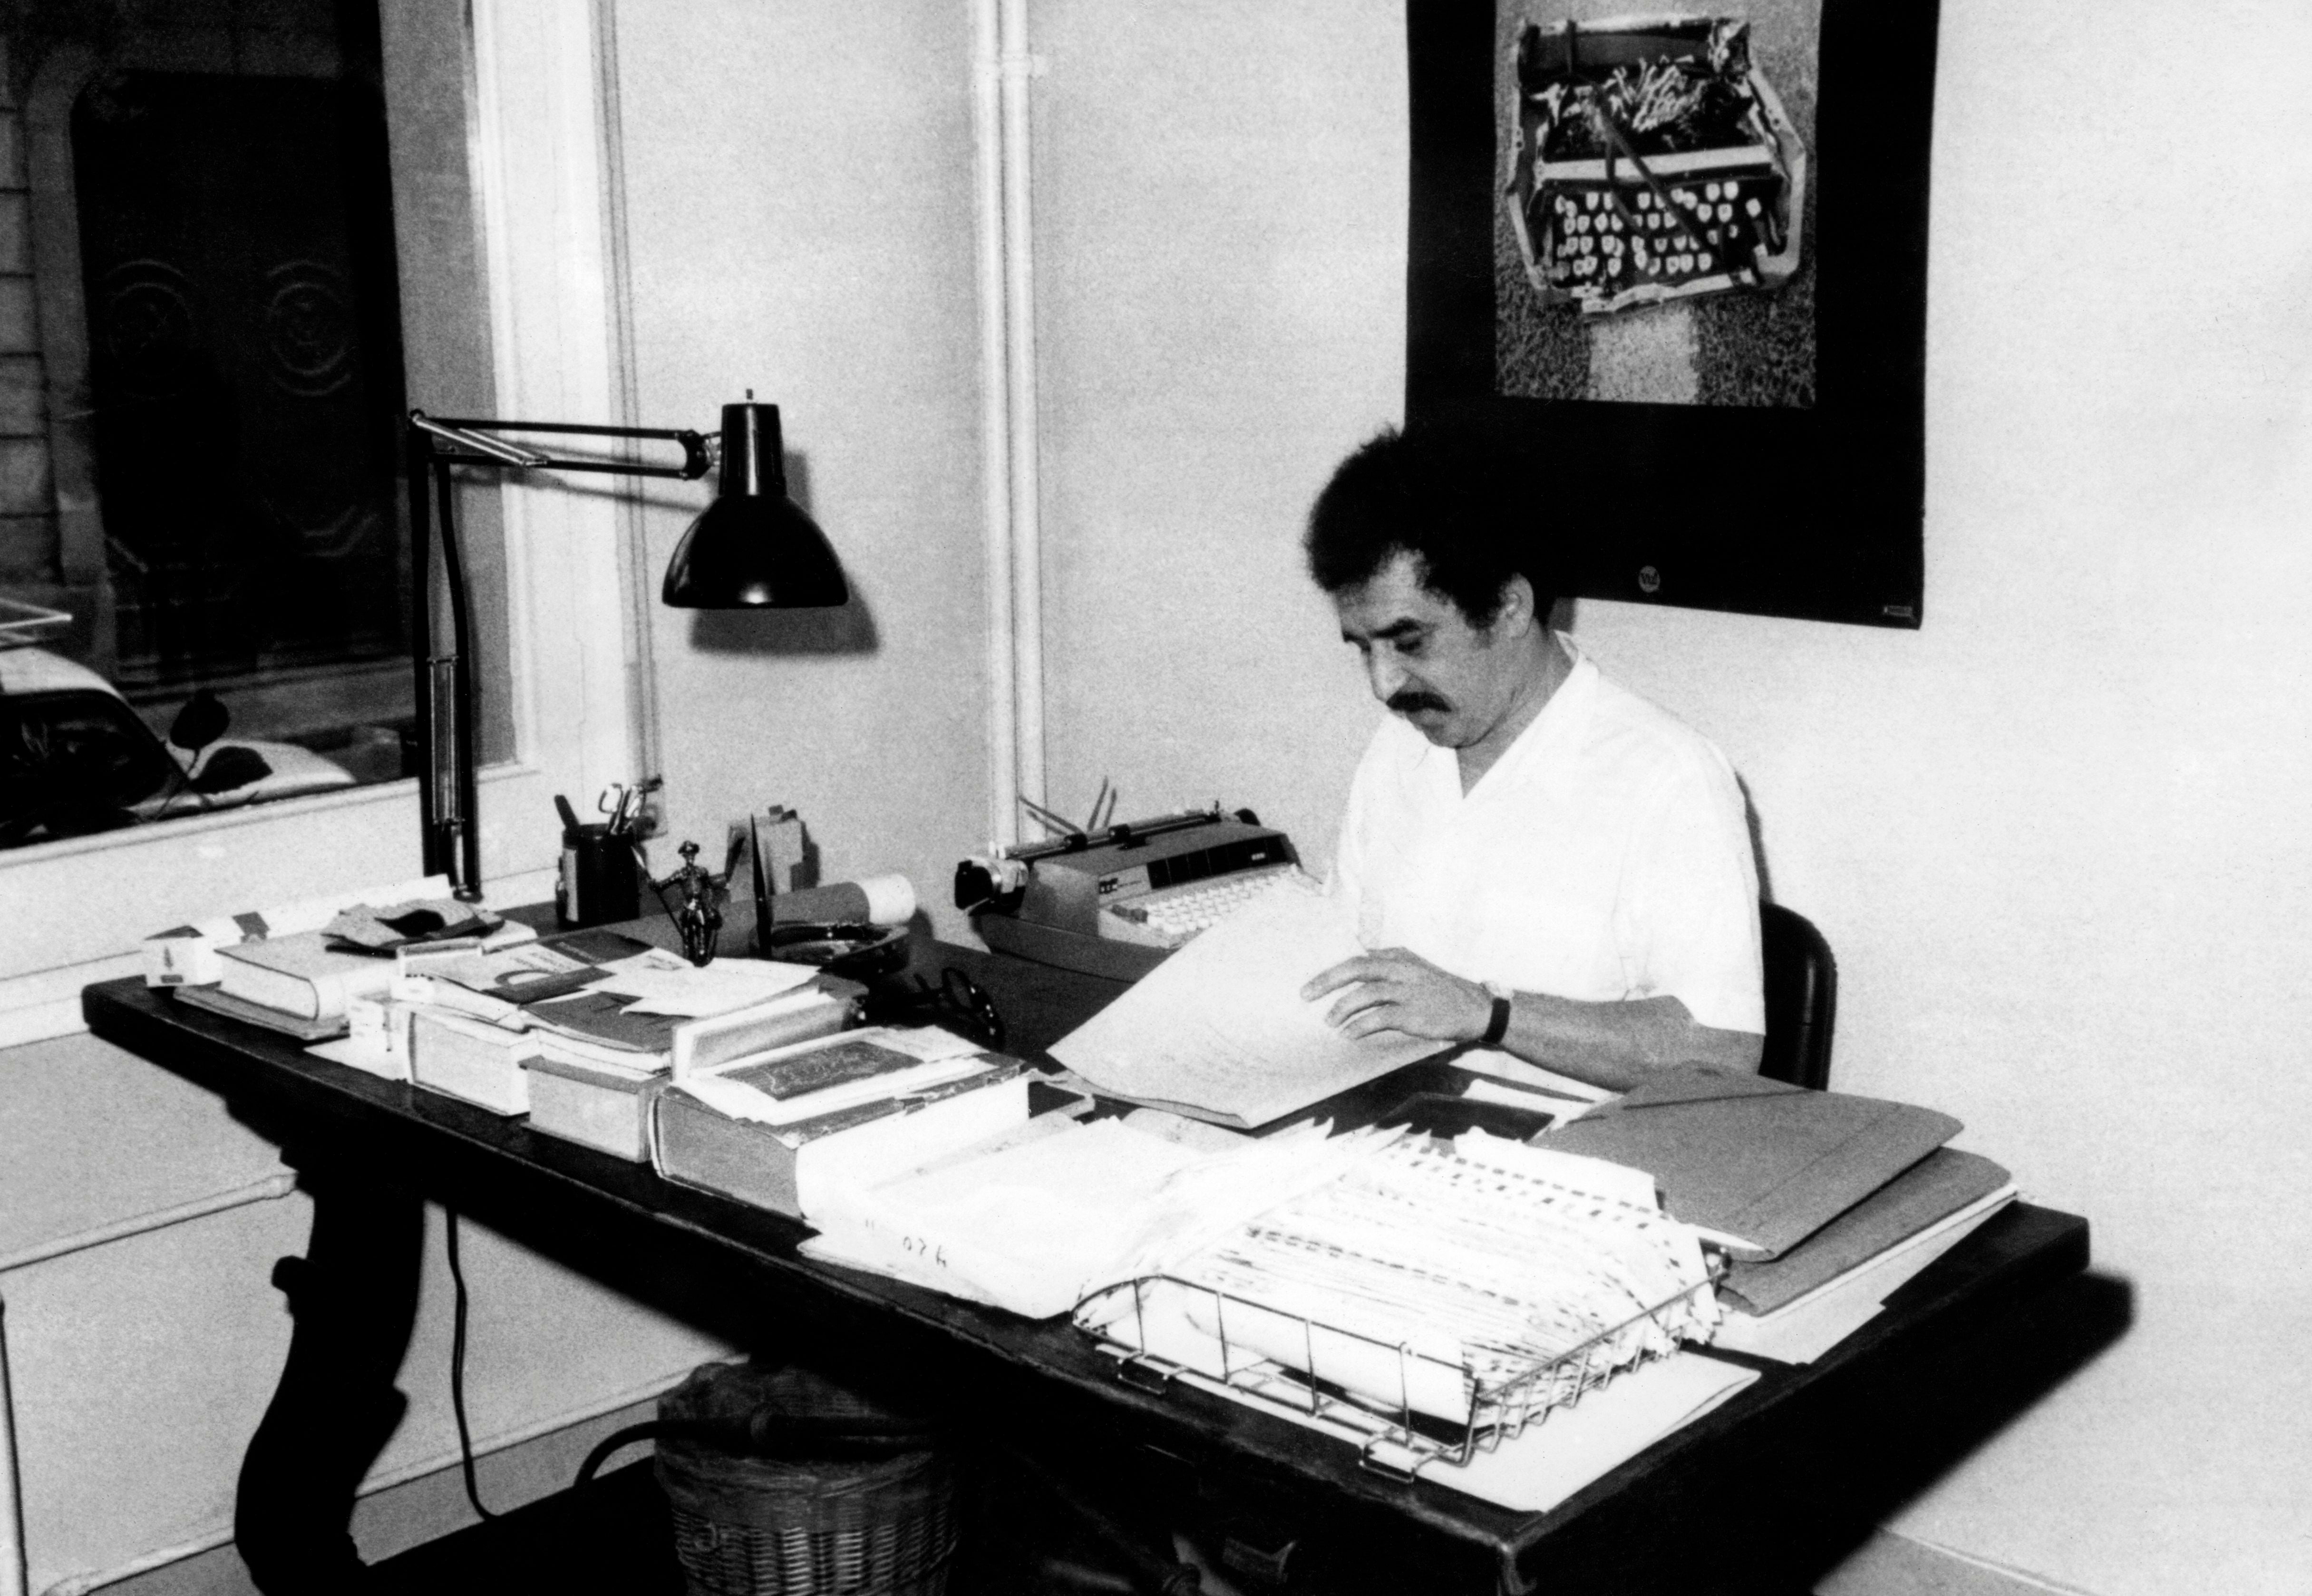 Gabriel Garcia Marquez writing at his home in Barcelona circa 1970